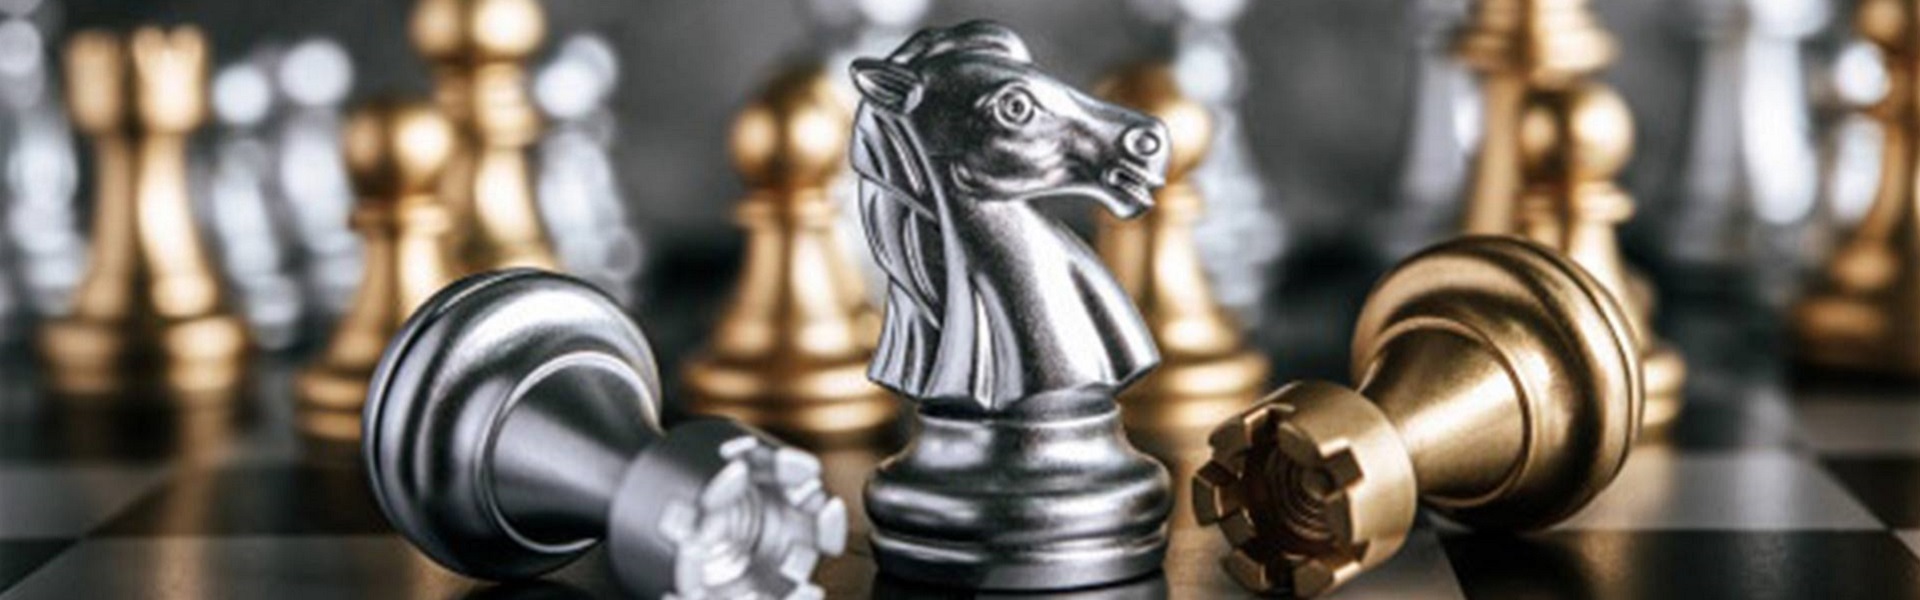 Cheap car rental Dubai |  Chess lessons Dubai & New York